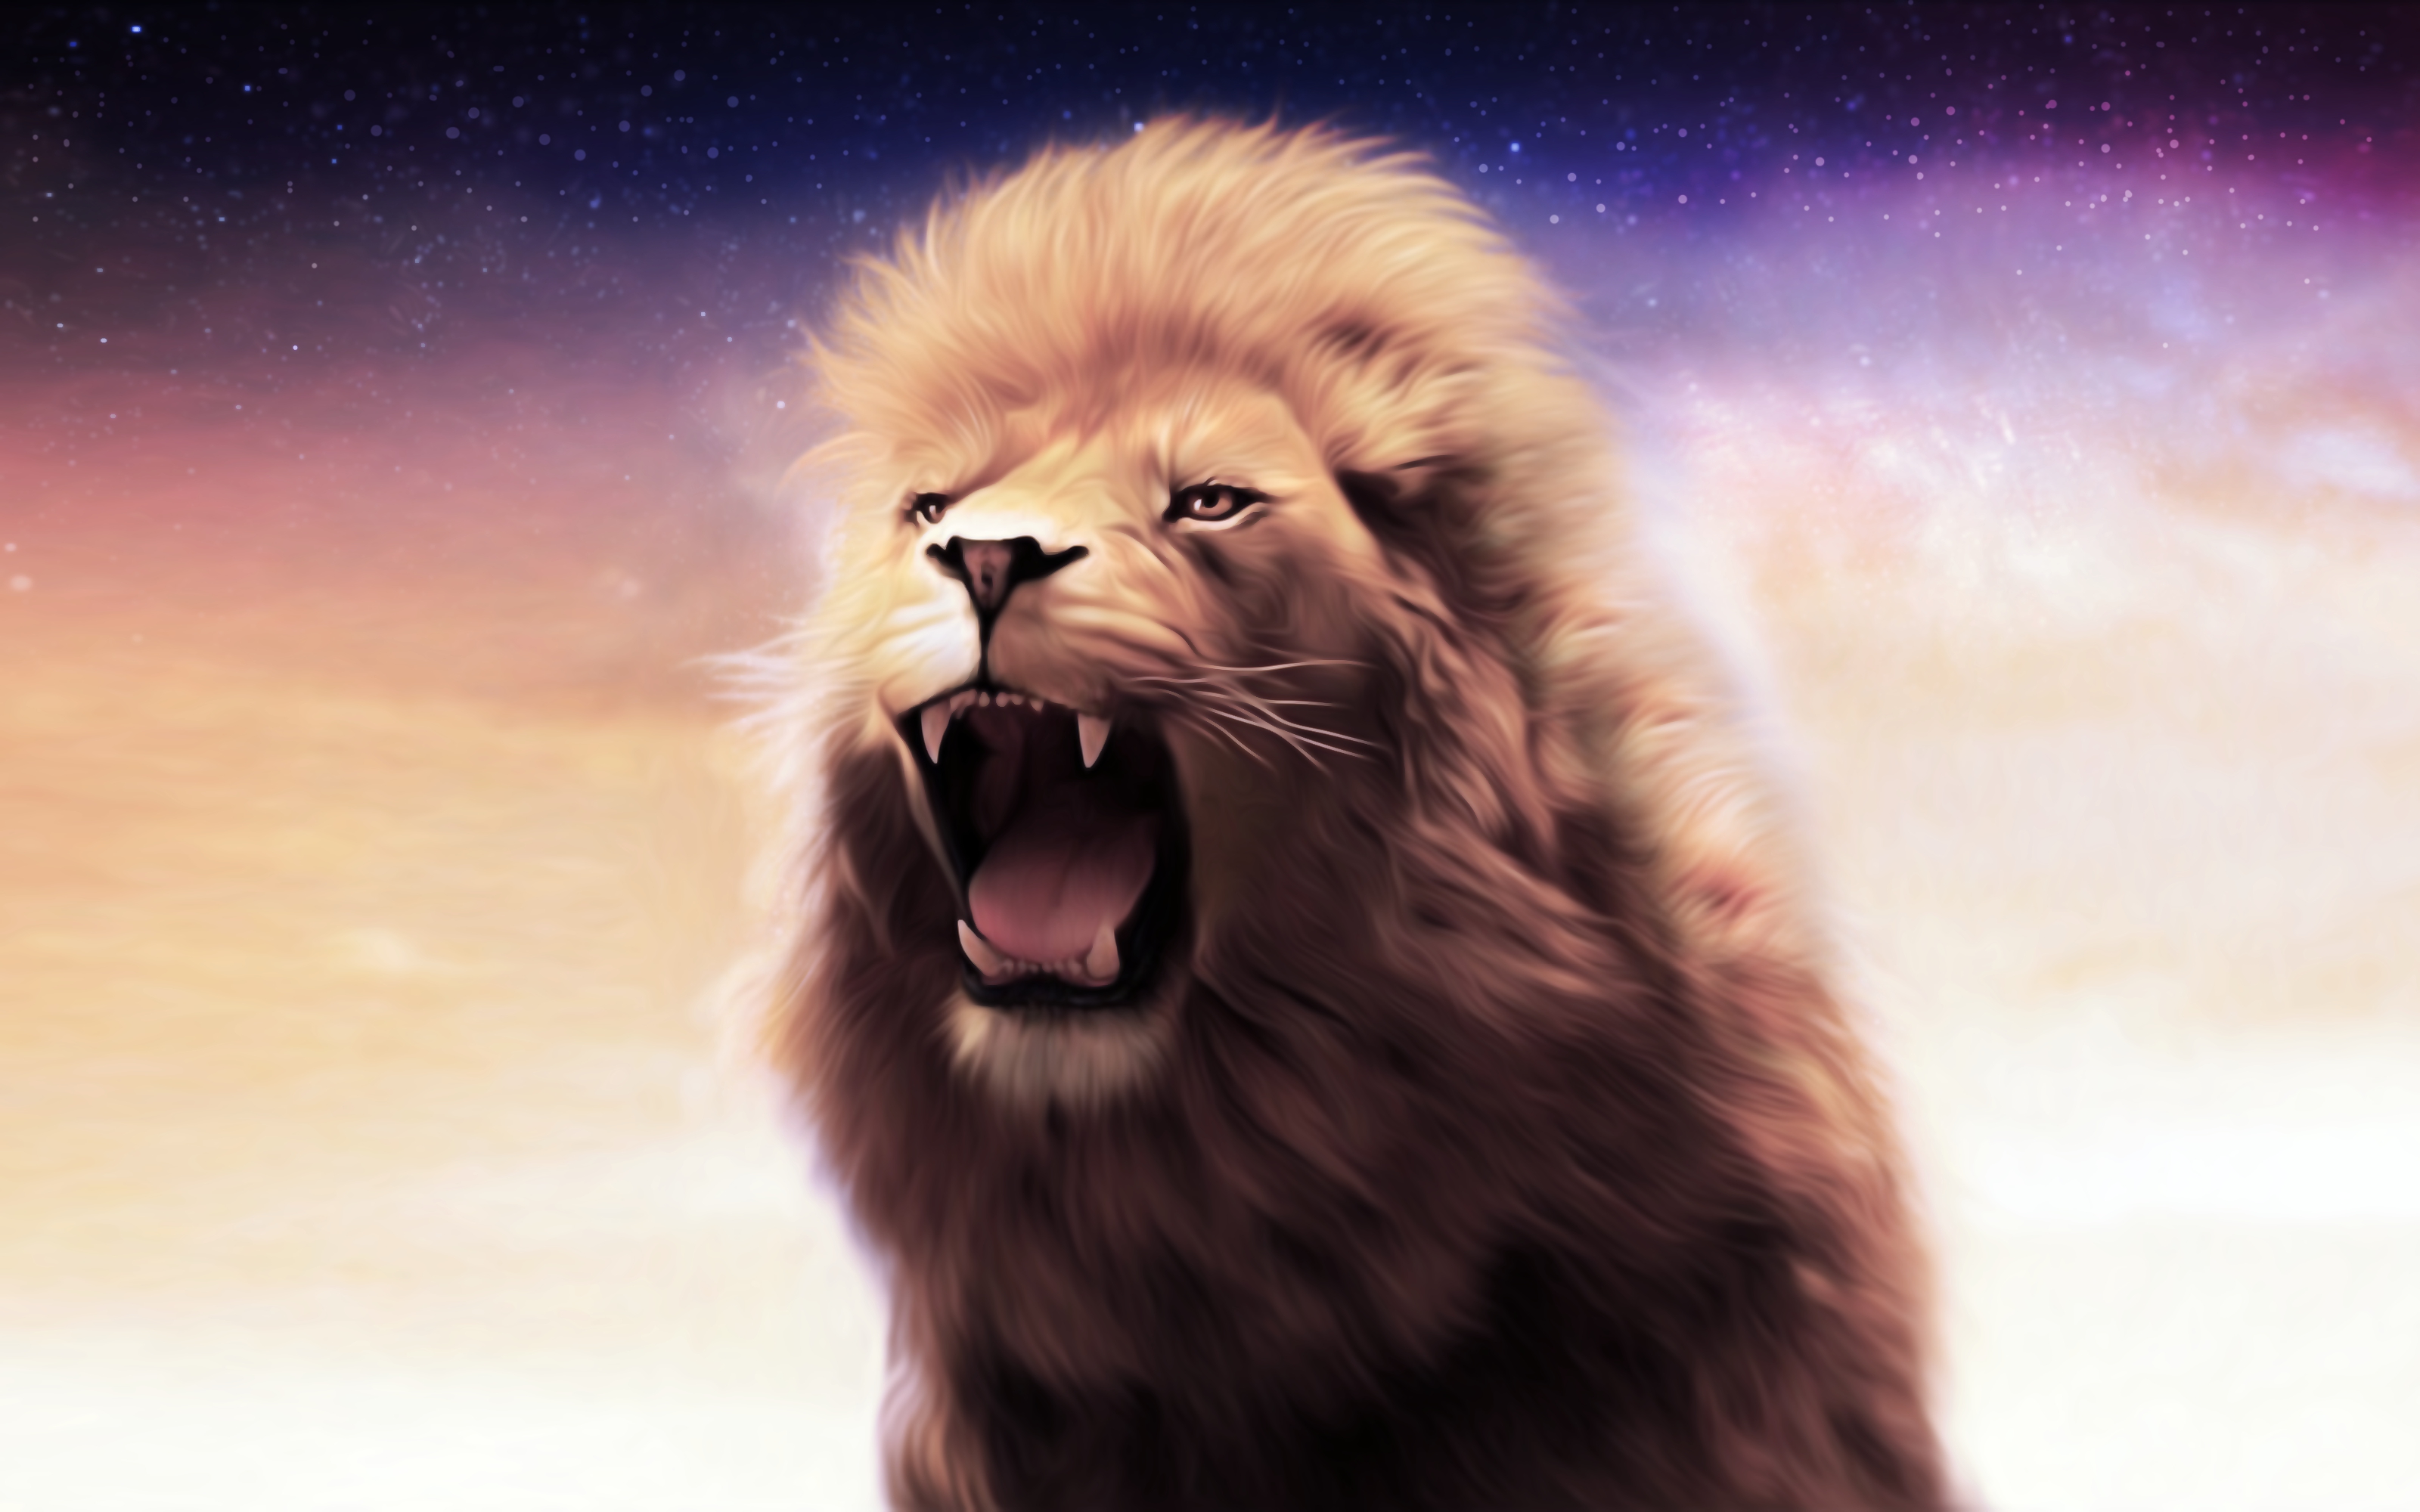 Roaring Lion Wallpaper Image Thecelebritypix